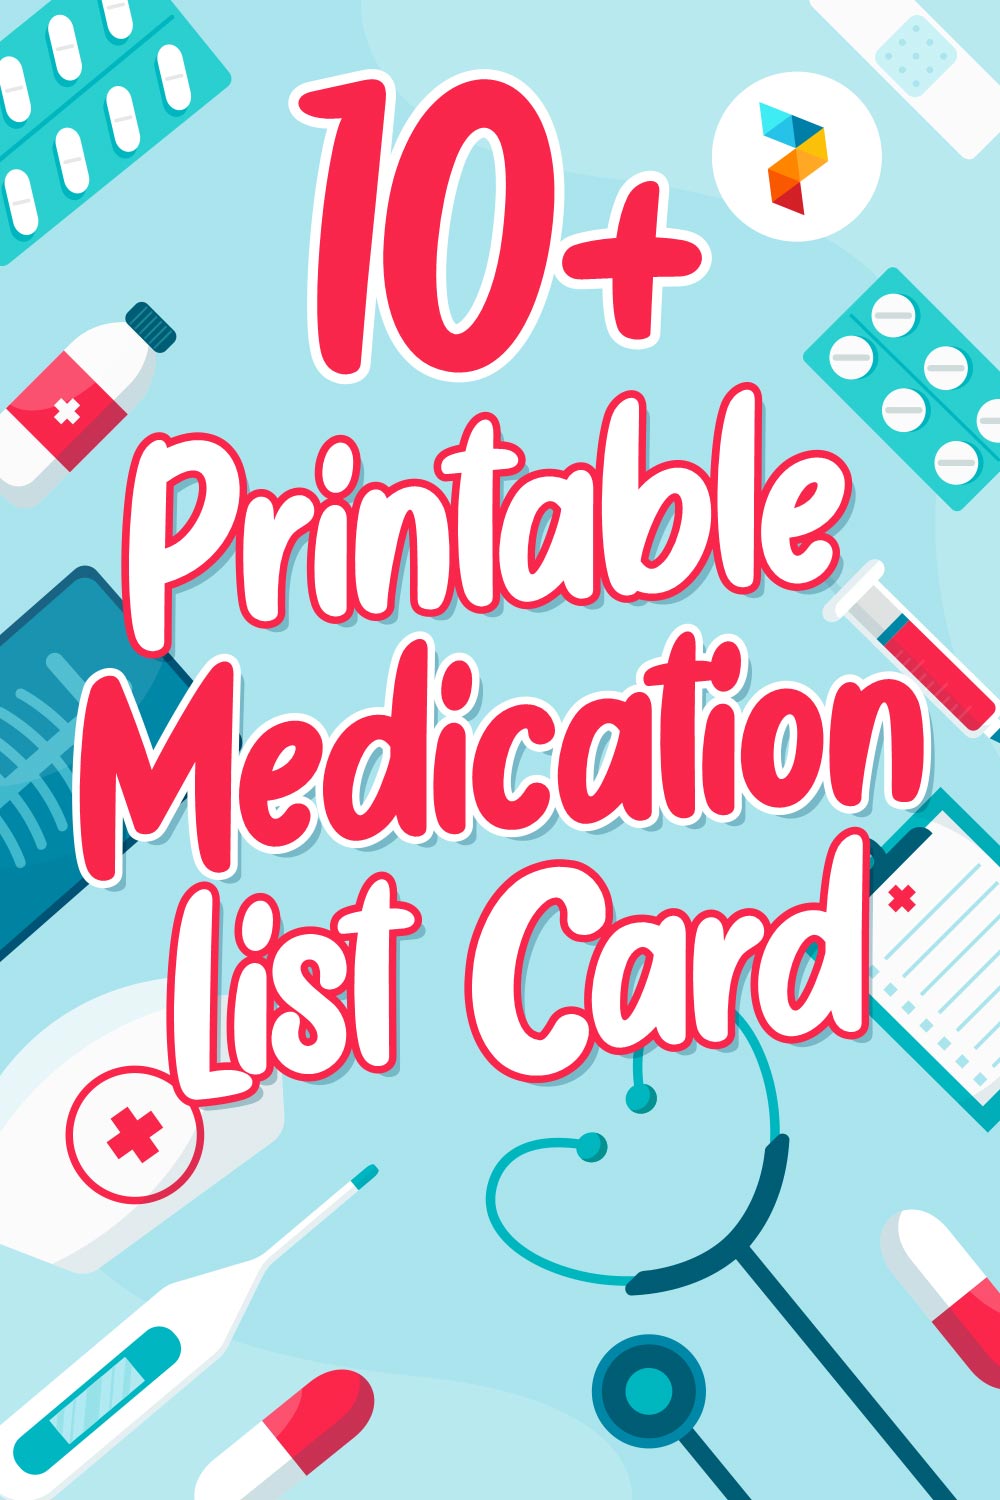 Printable Medication List Card